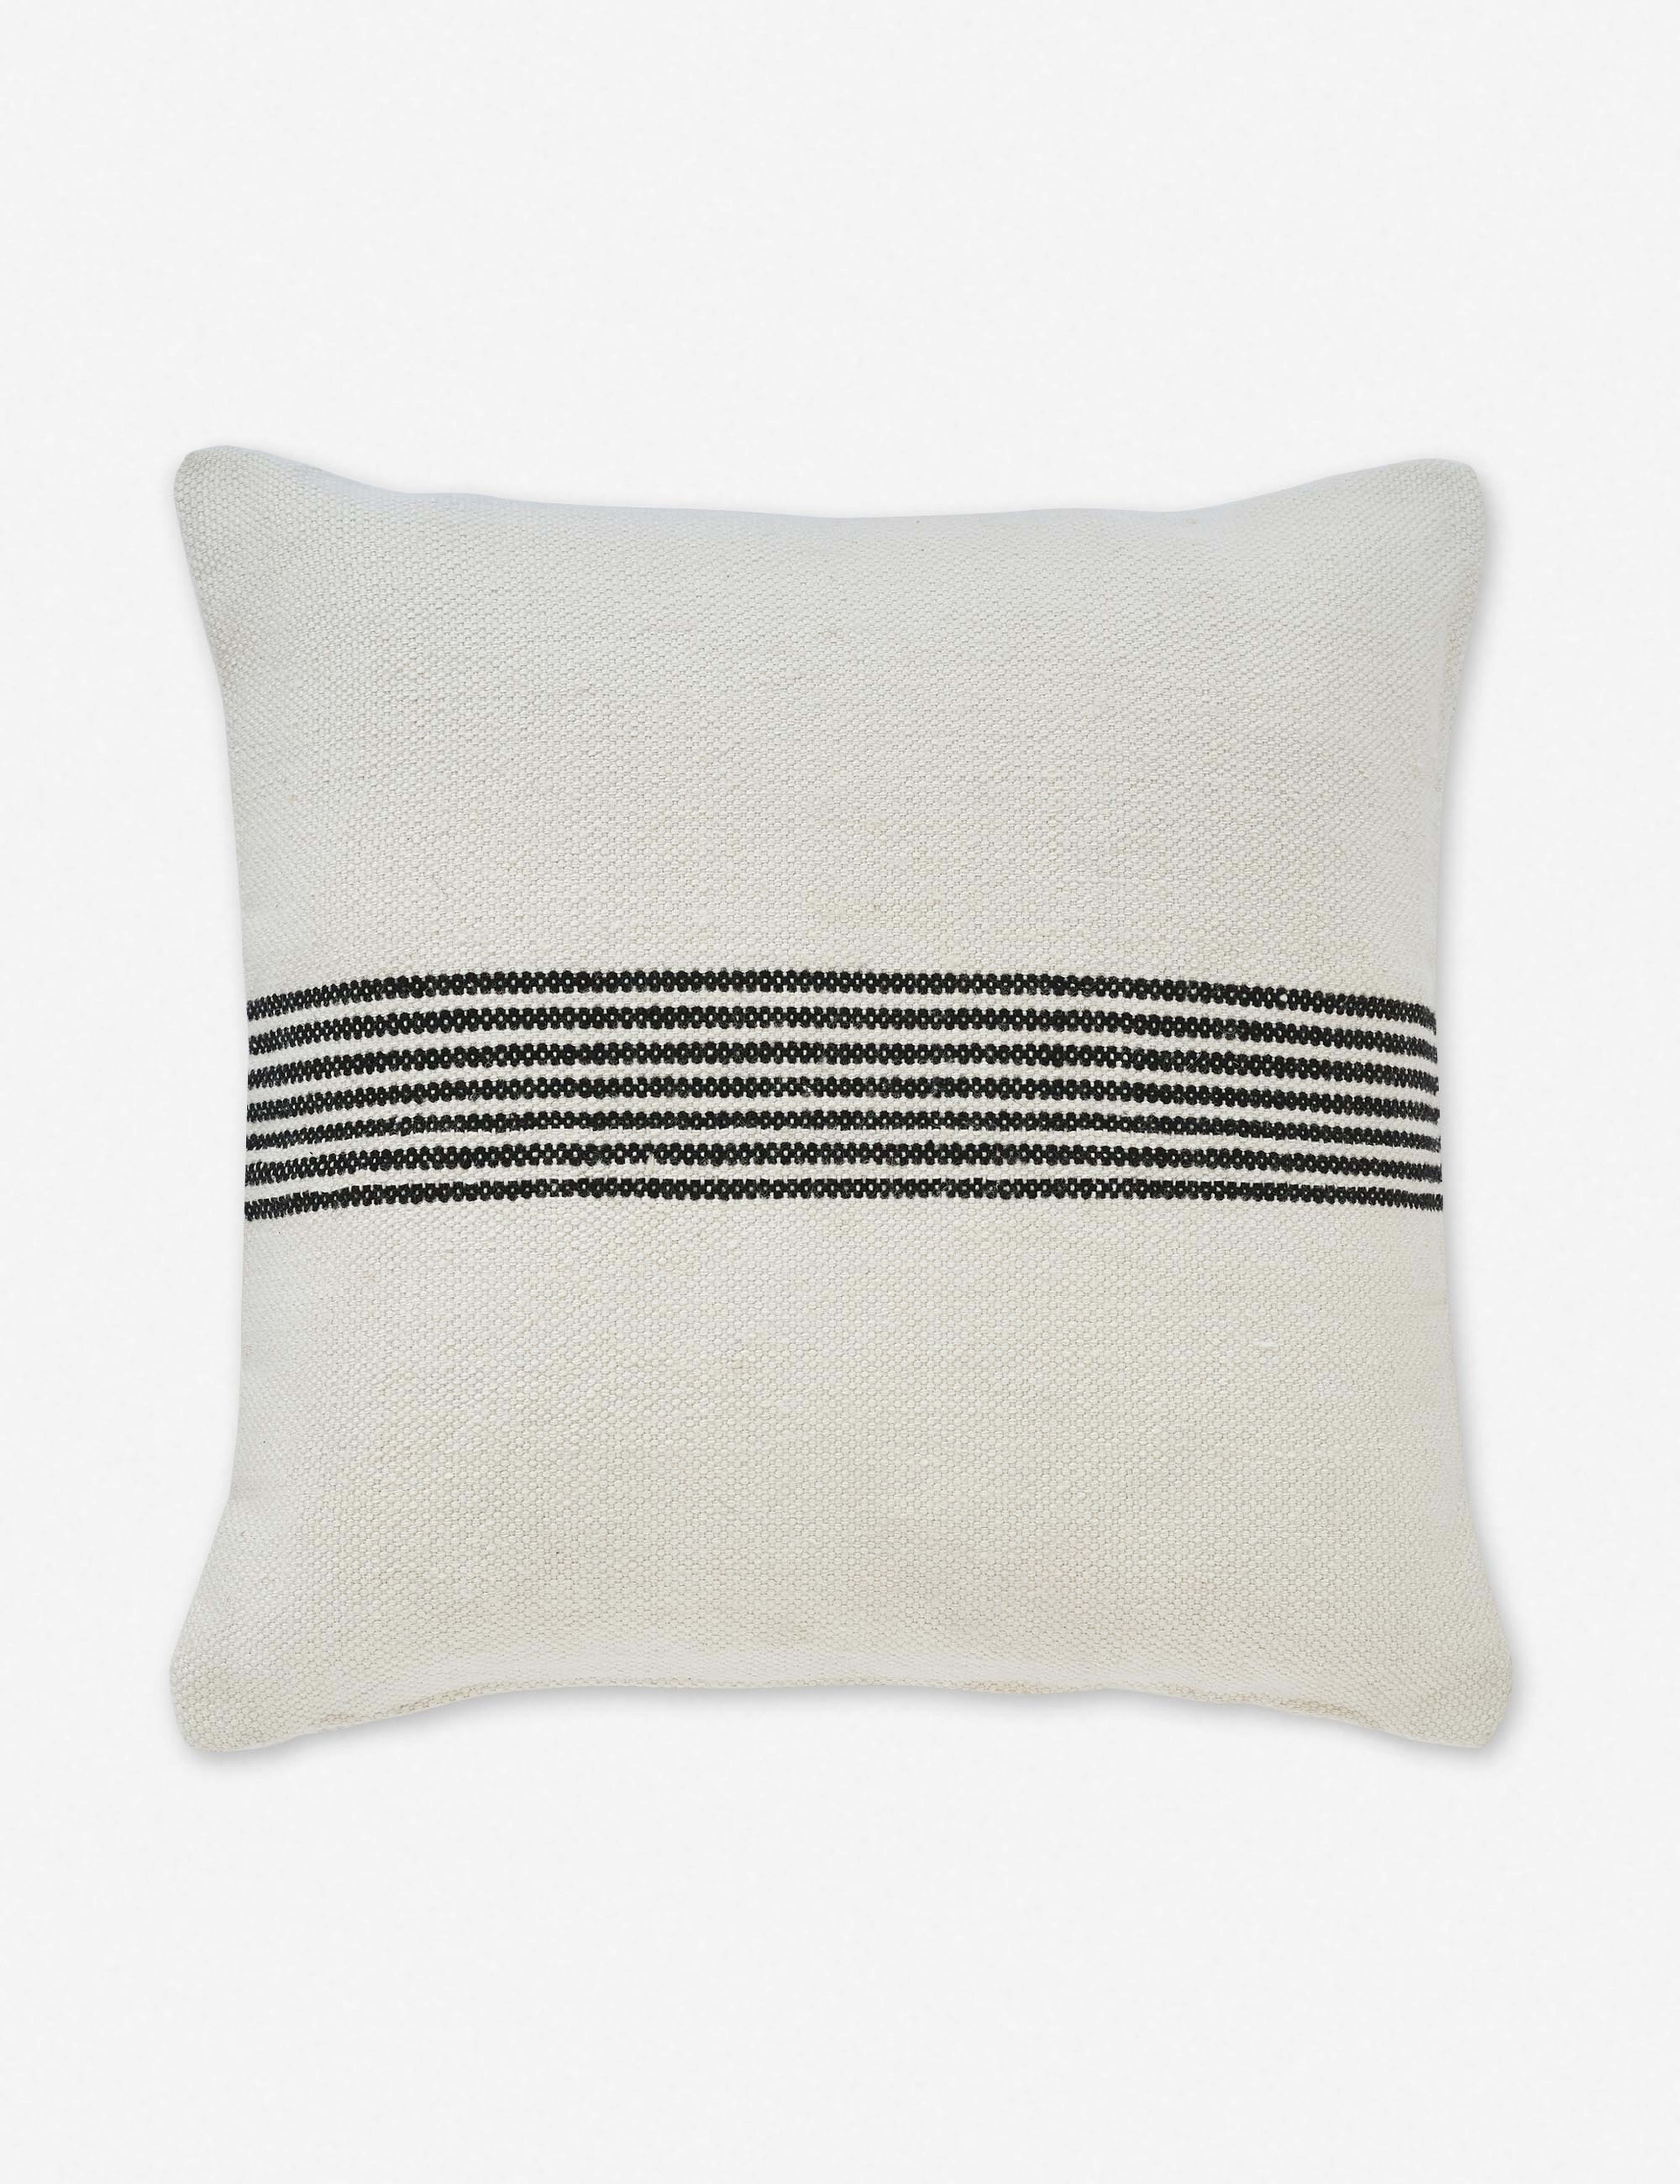 Katya Indoor/Outdoor Pillow, Black Stripe, 20" x 20" - Lulu and Georgia